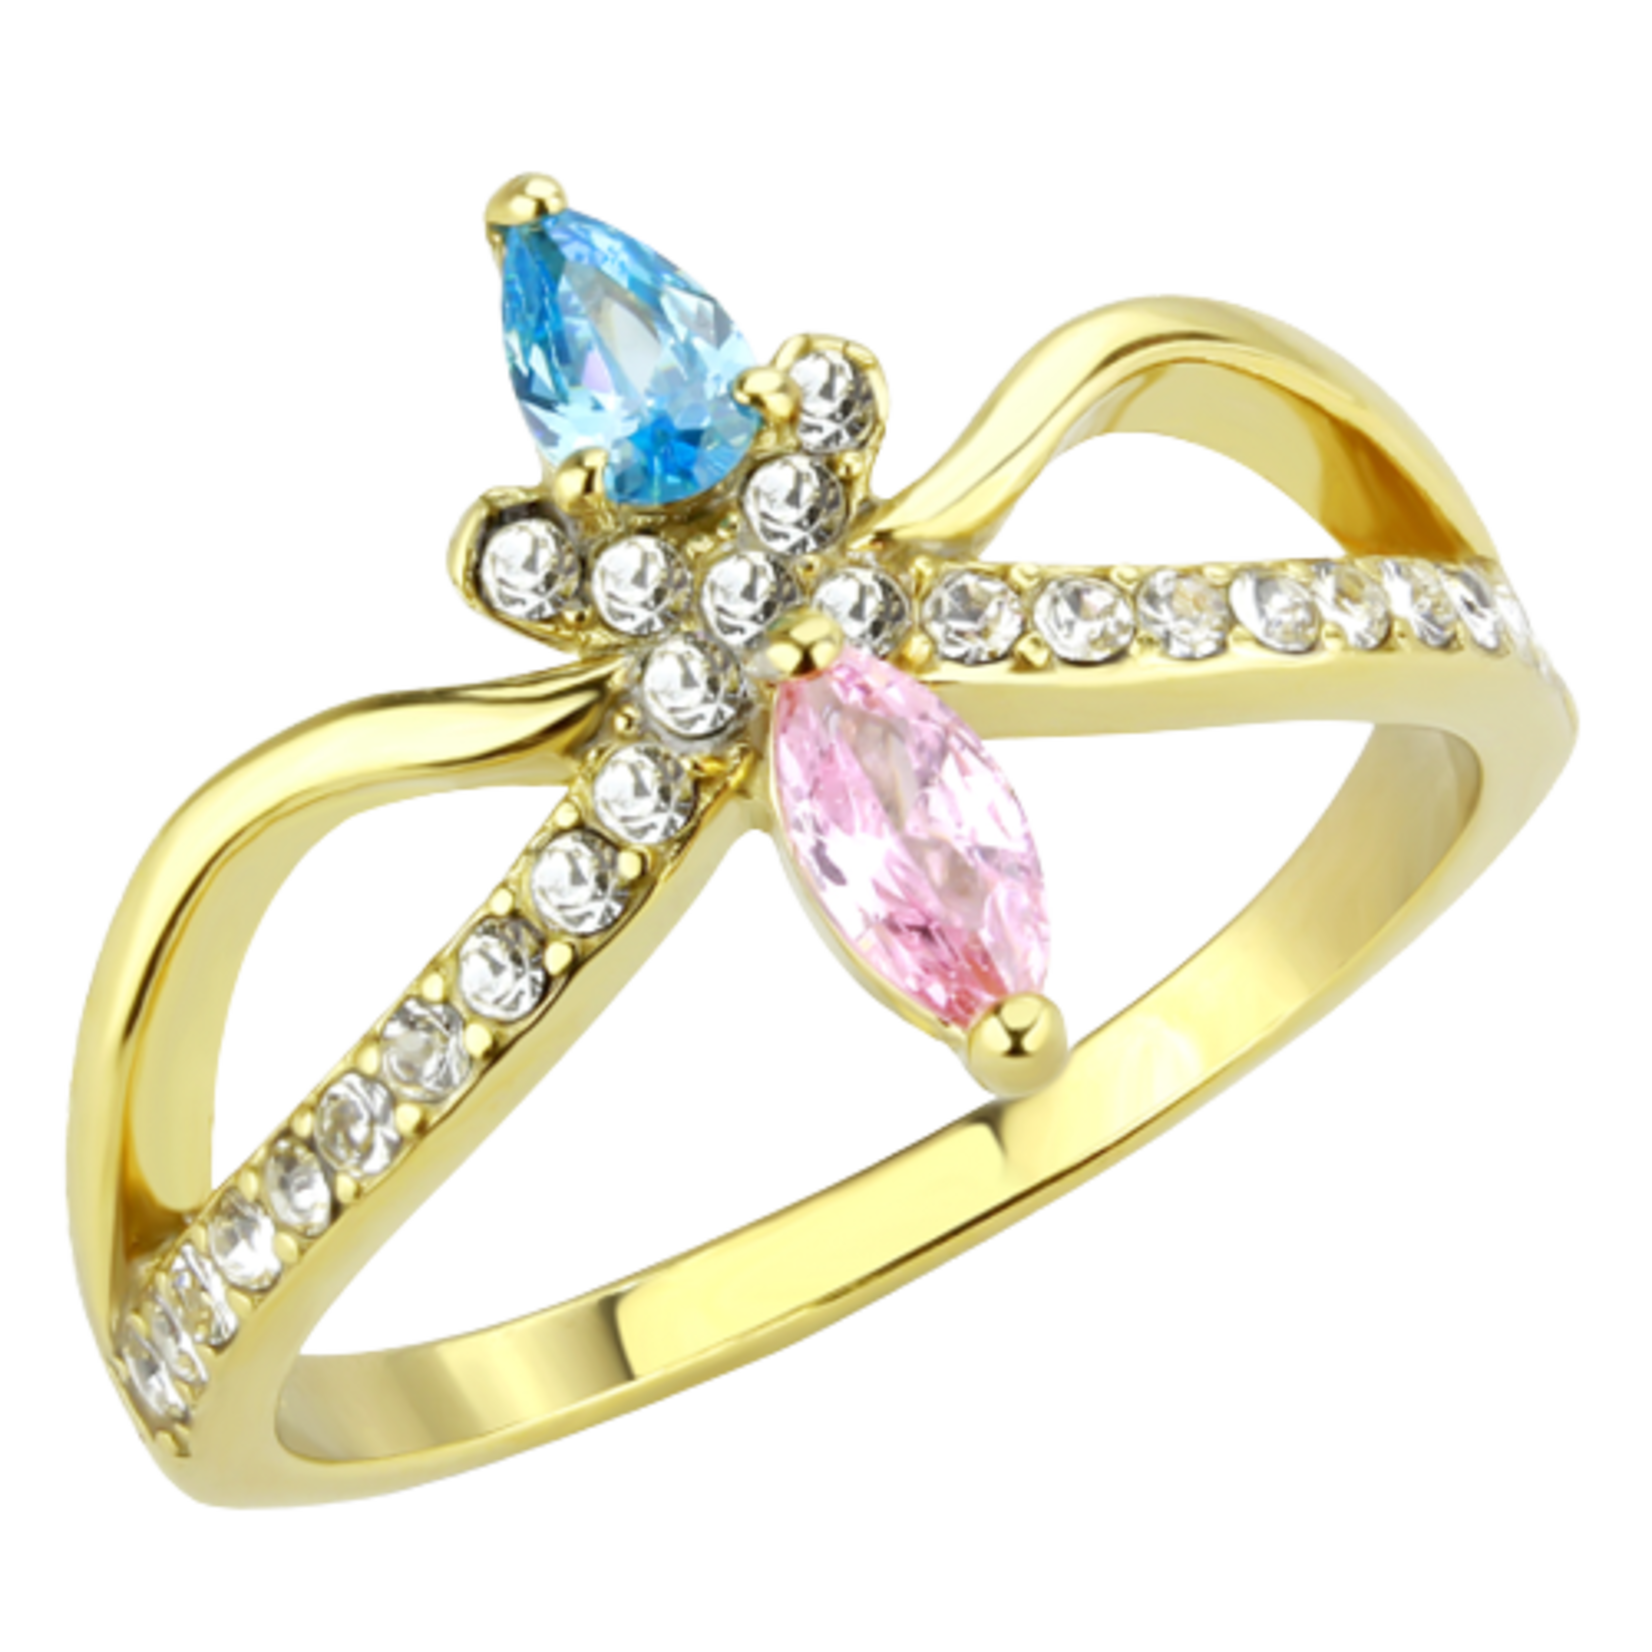 ROS Elegant Multicolor Stainless Steel Ring